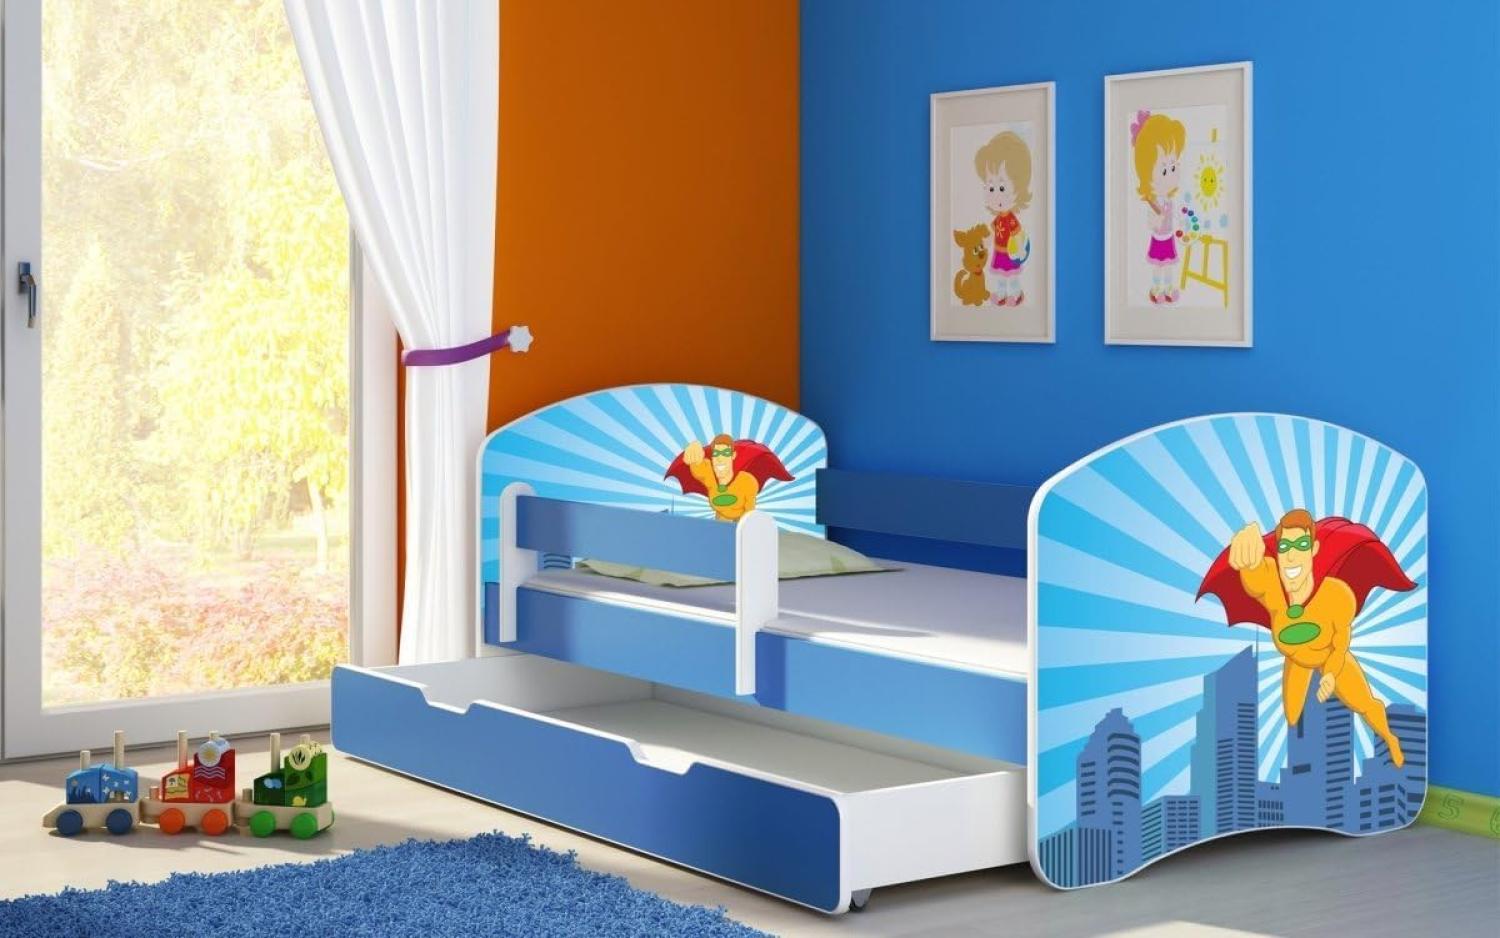 Kinderbett Dream mit verschiedenen Motiven 160x80 Hero Bild 1